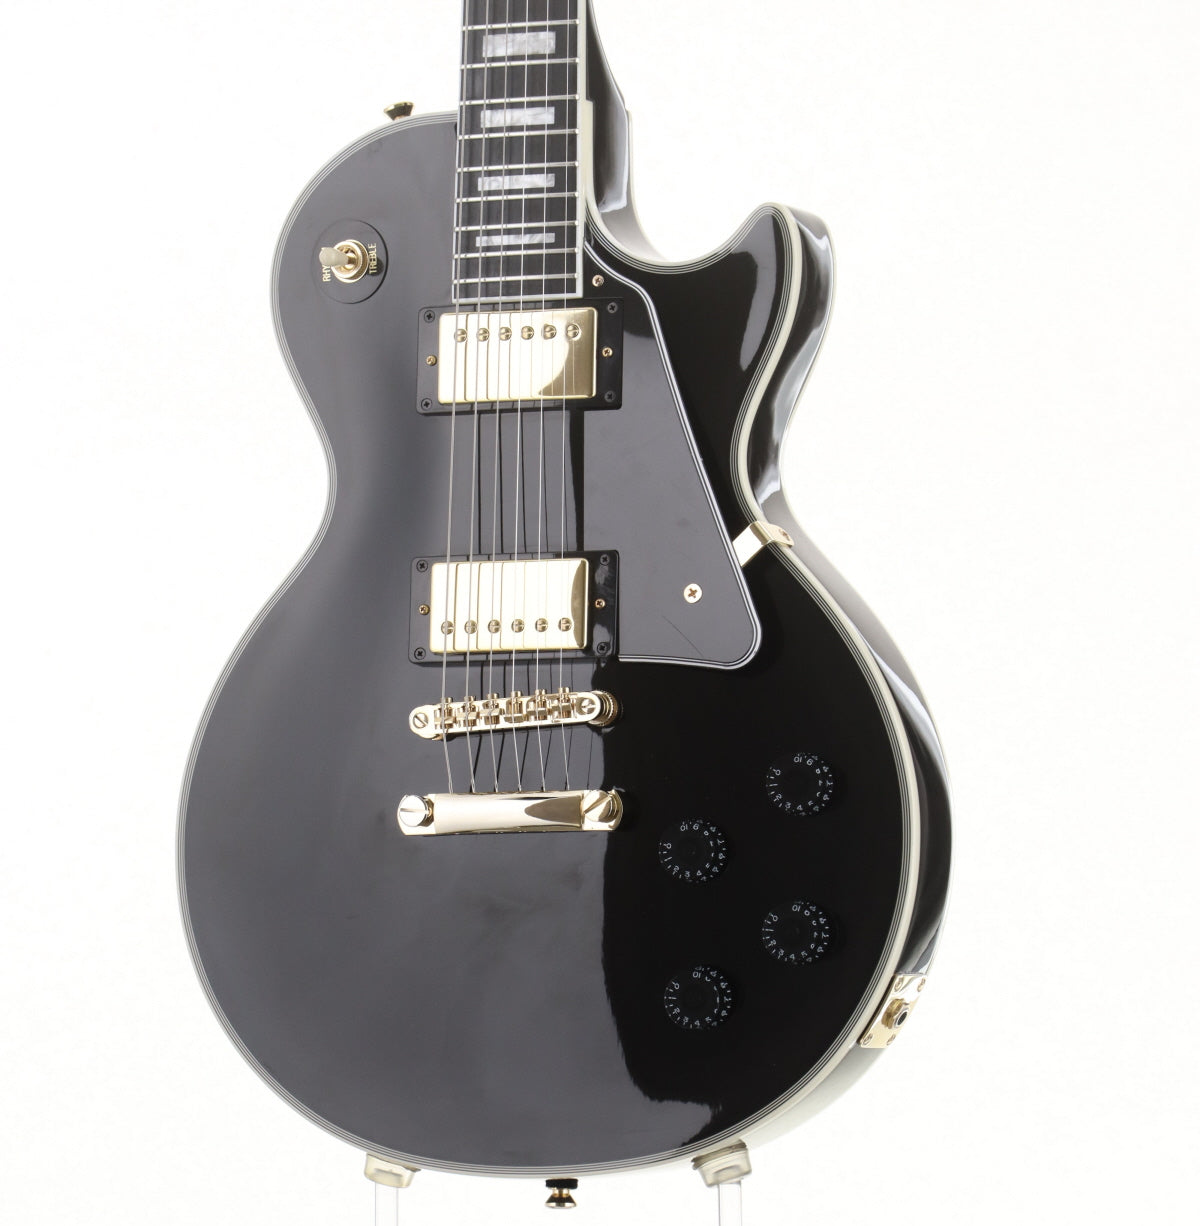 [SN 23031527279] USED Epiphone / Inspired by Gibson Les Paul Custom Ebony [03]